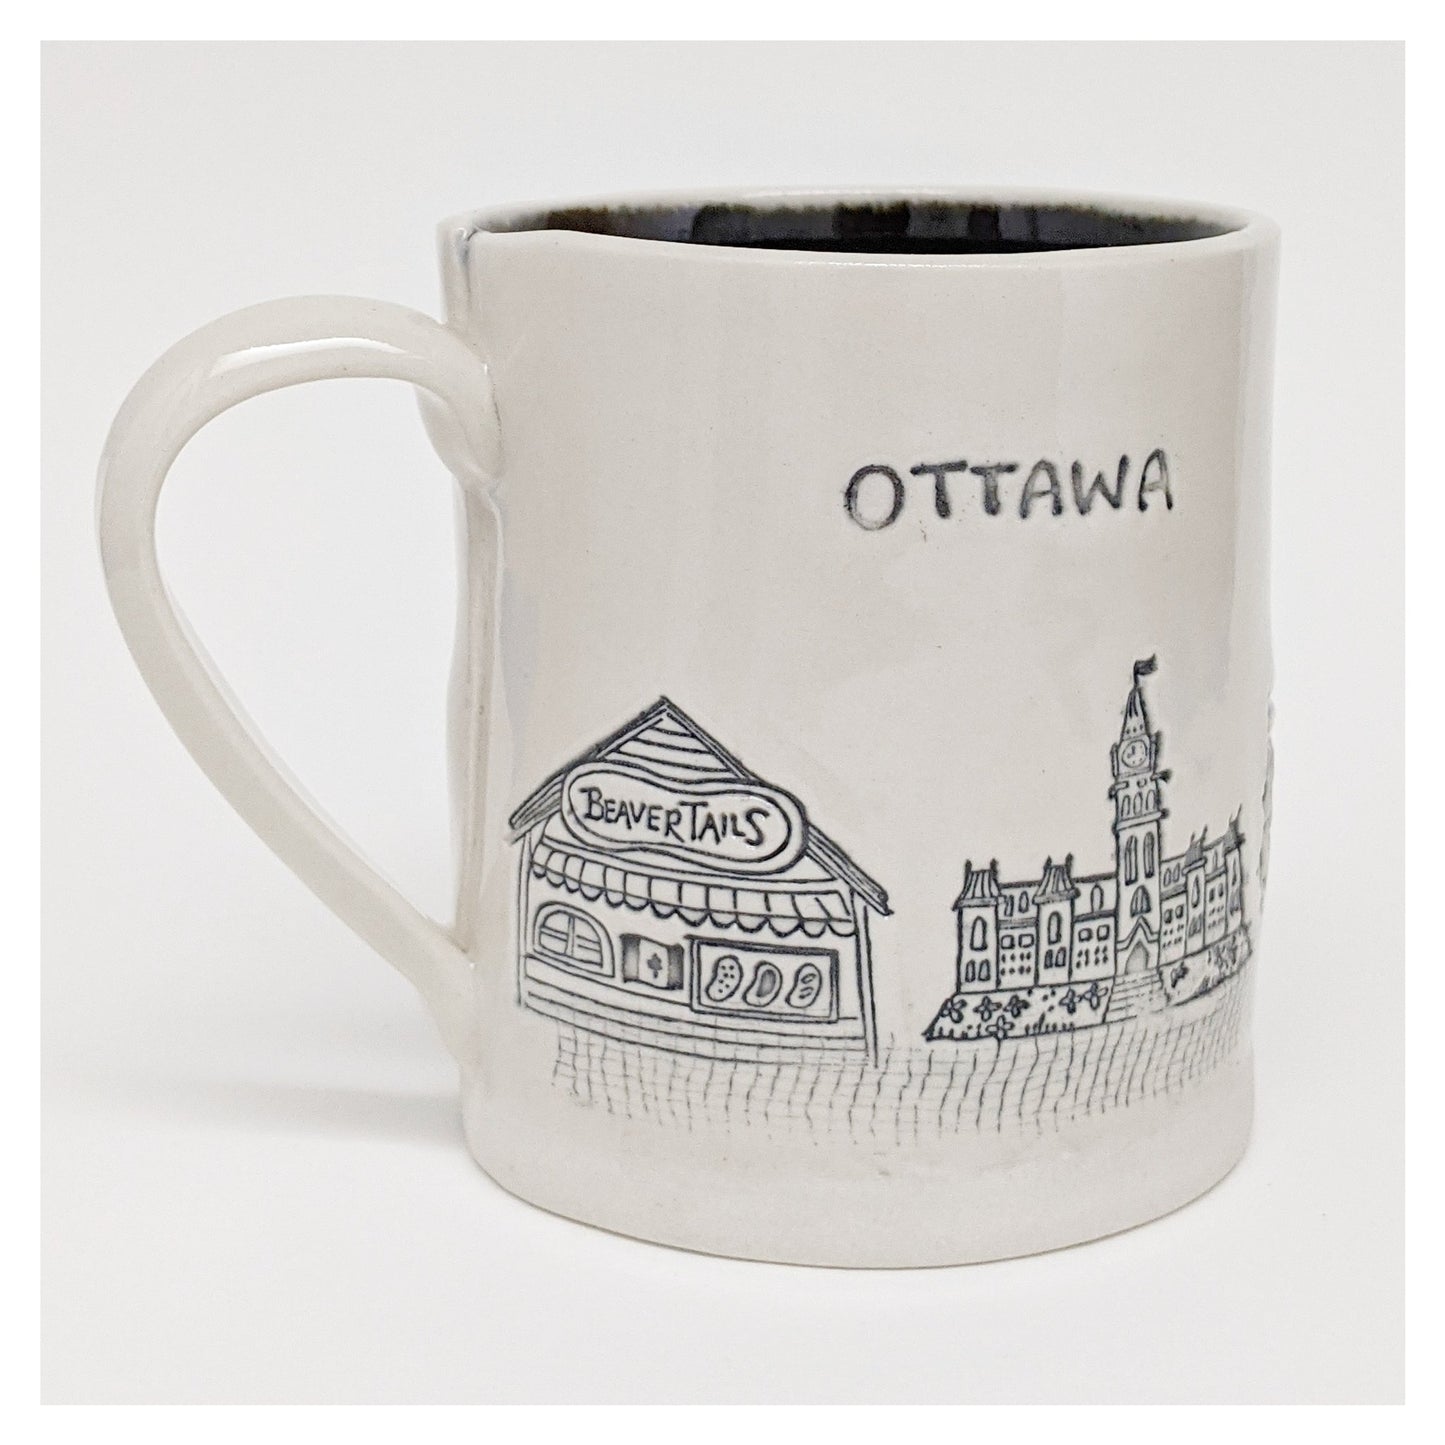 Steffi Acevedo – Tasse « Ottawa » en céramique (12 oz)